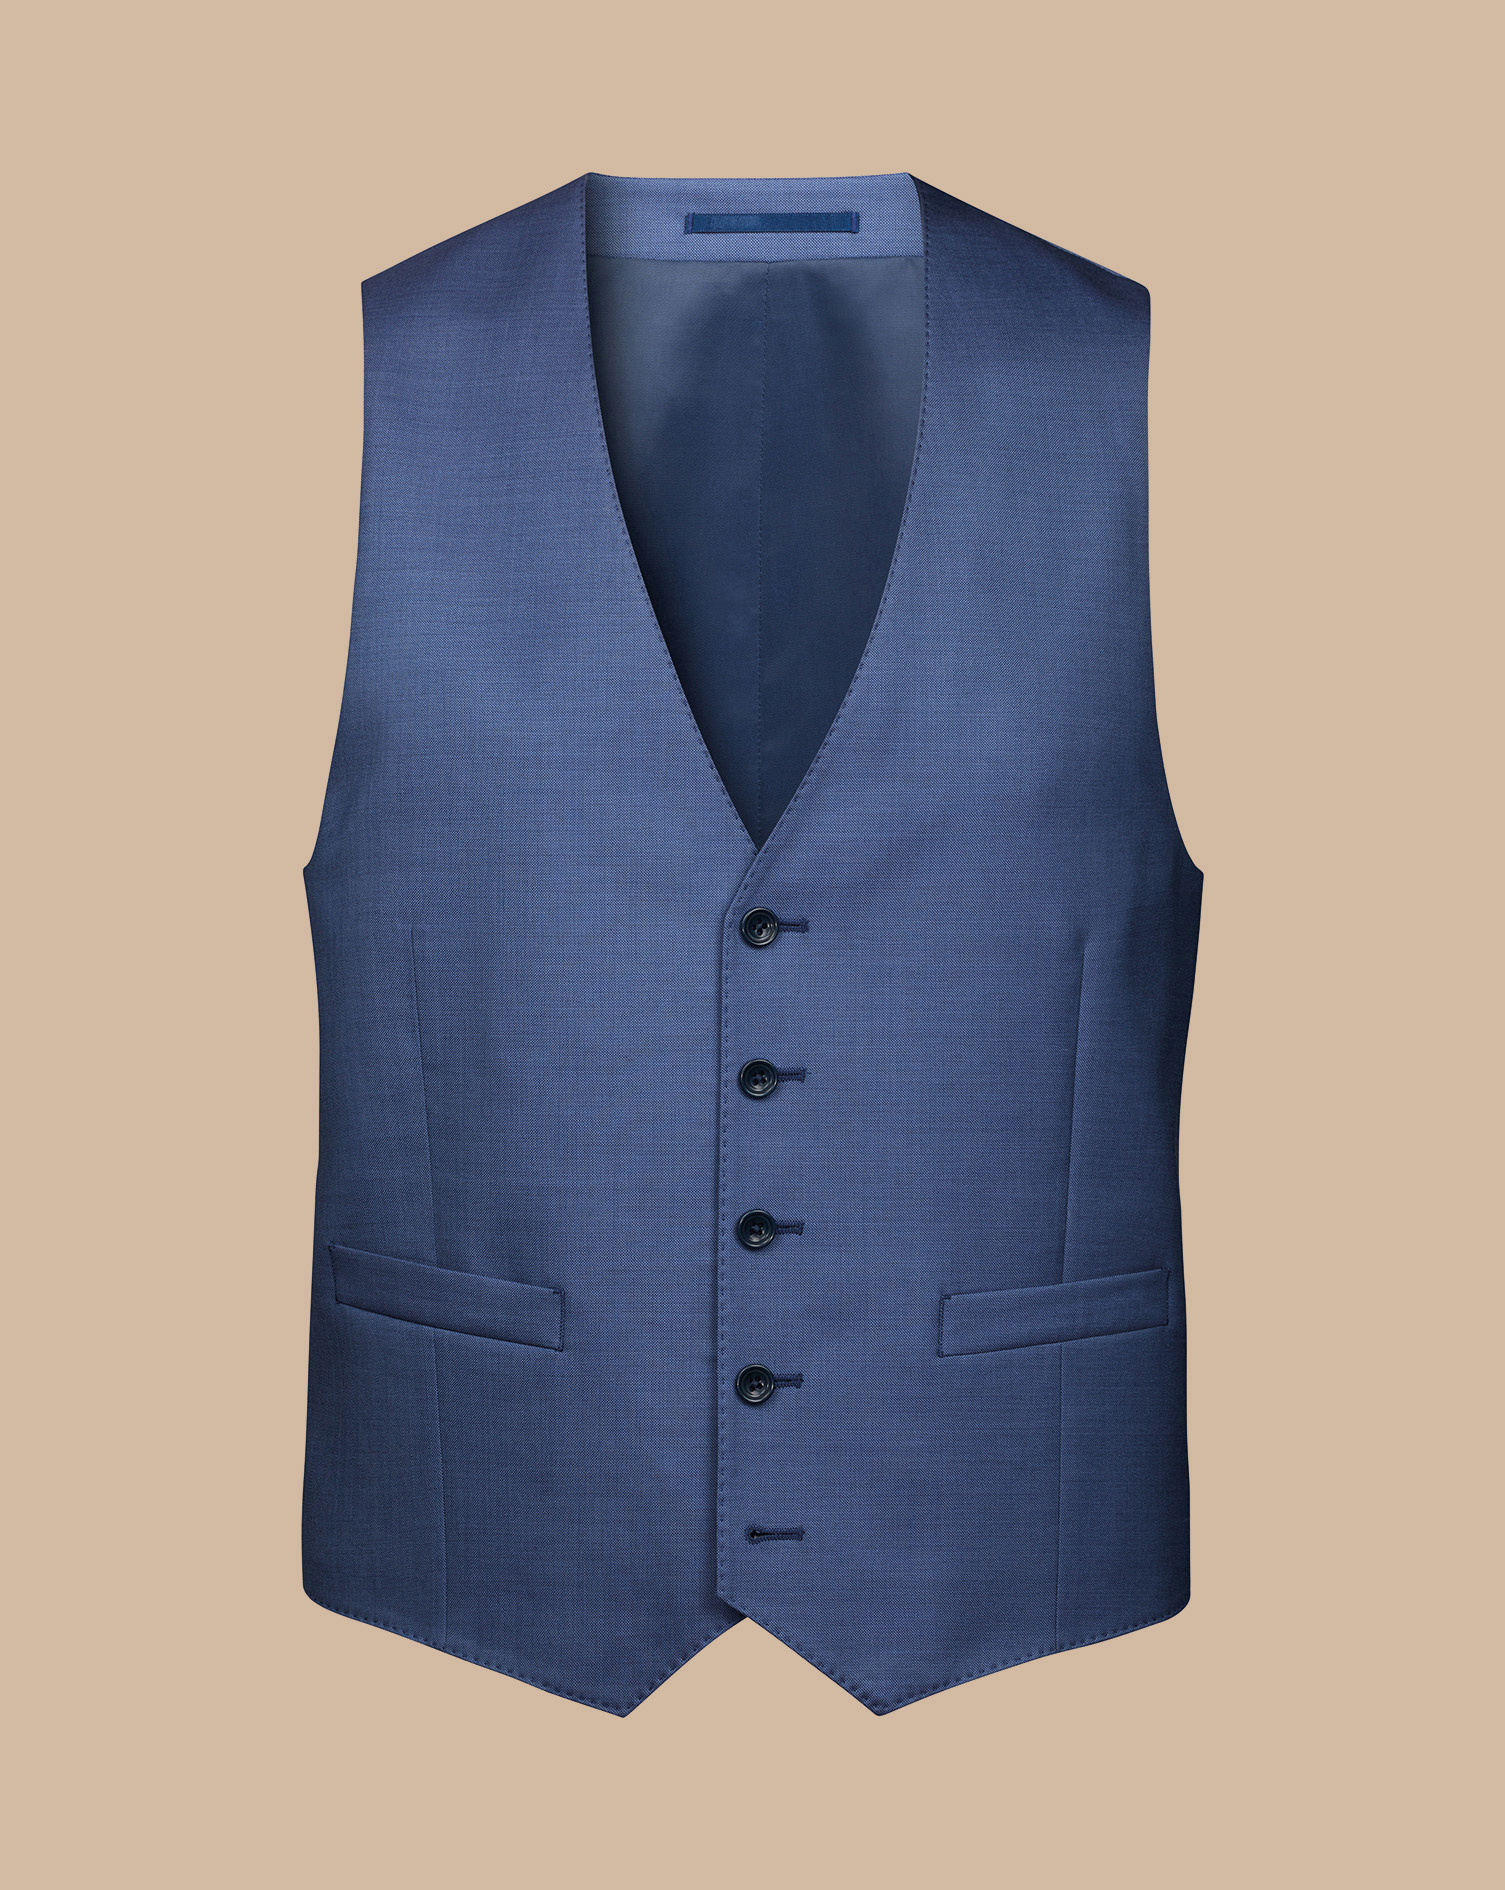 Men's Charles Tyrwhitt Ultimate Performance Sharkskin Suit Waistcoat - Indigo Blue Size w36 Wool
